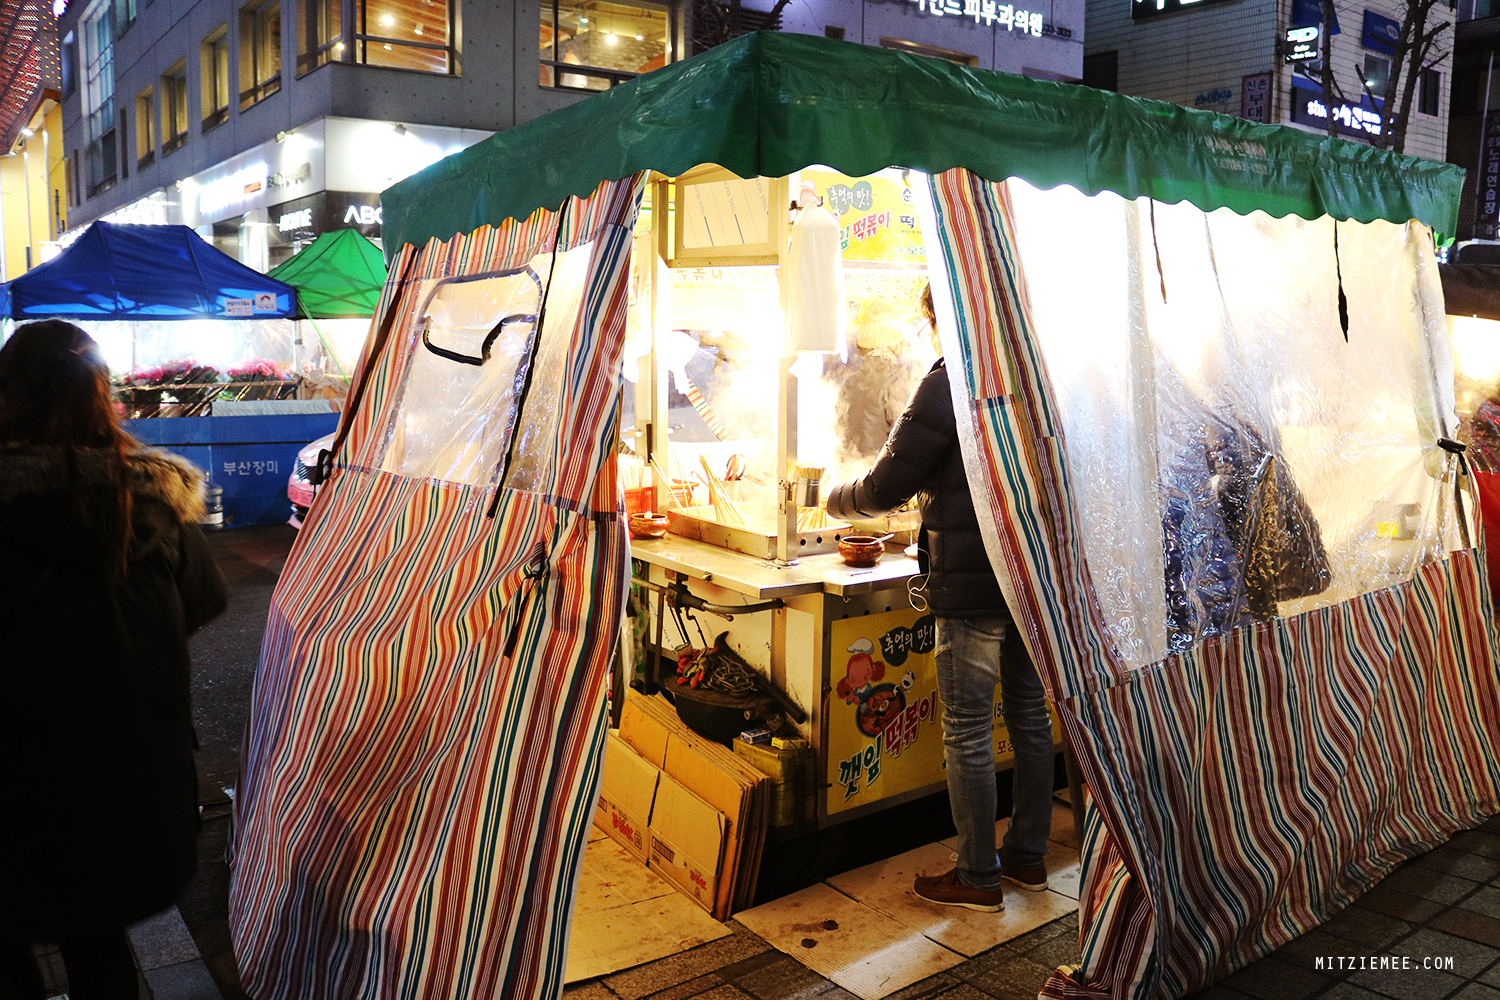 Pojangmacha tent restaurant in Hongdae, Seoul